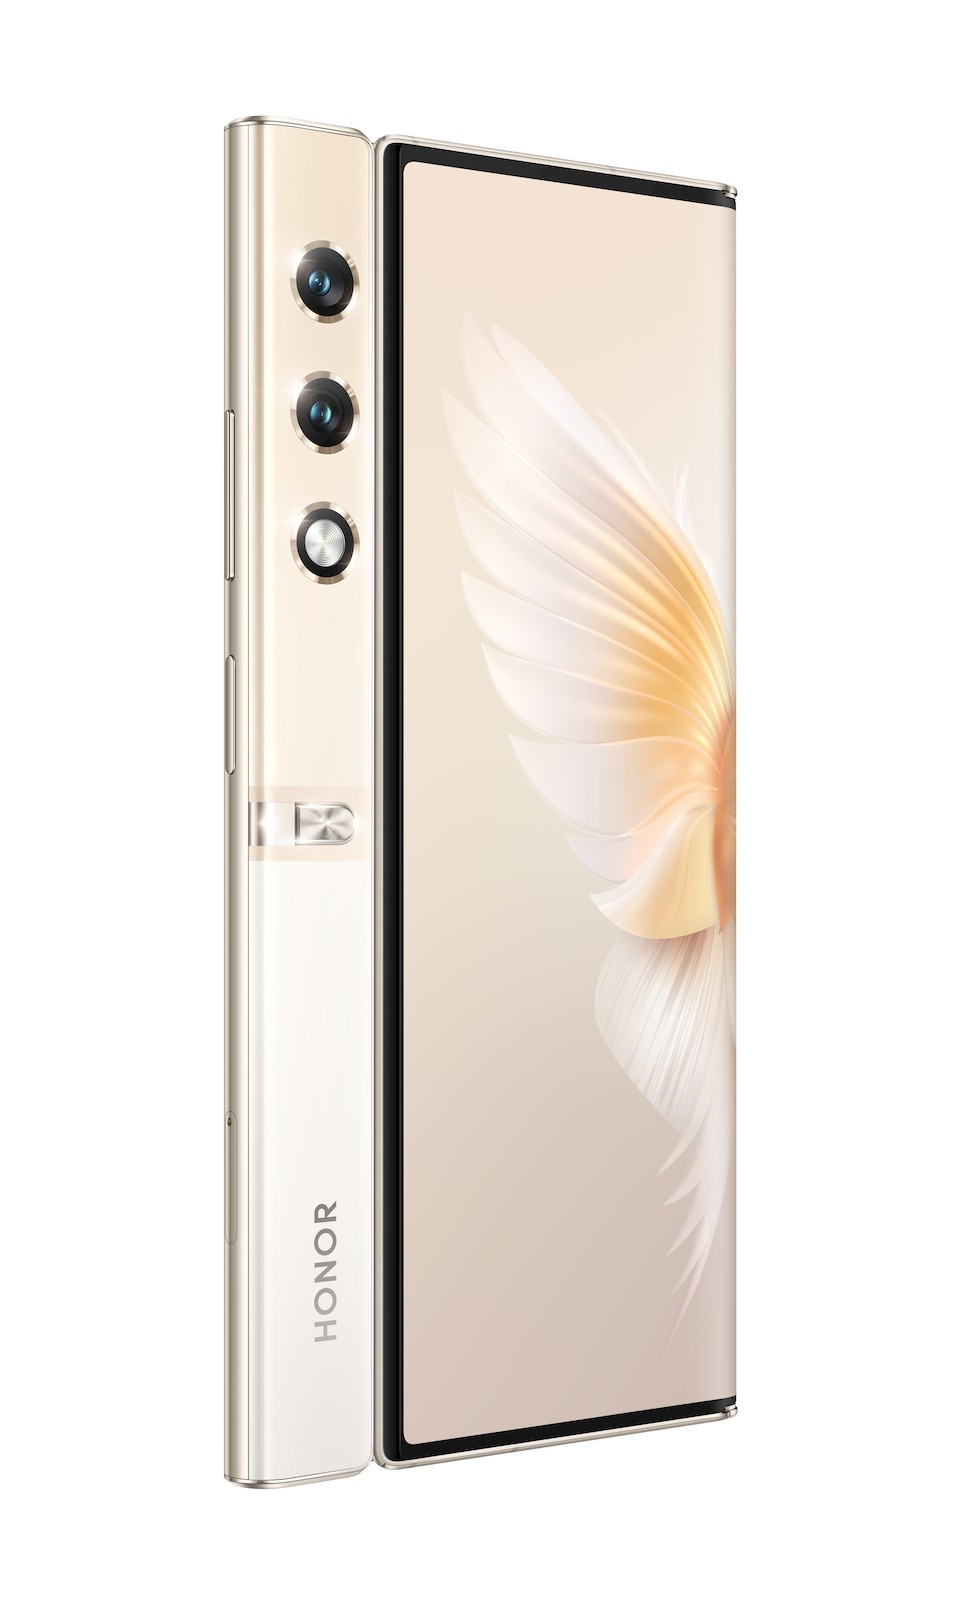 Honor V Purse: Fashion-focused concept phone unveiled at IFA 2023